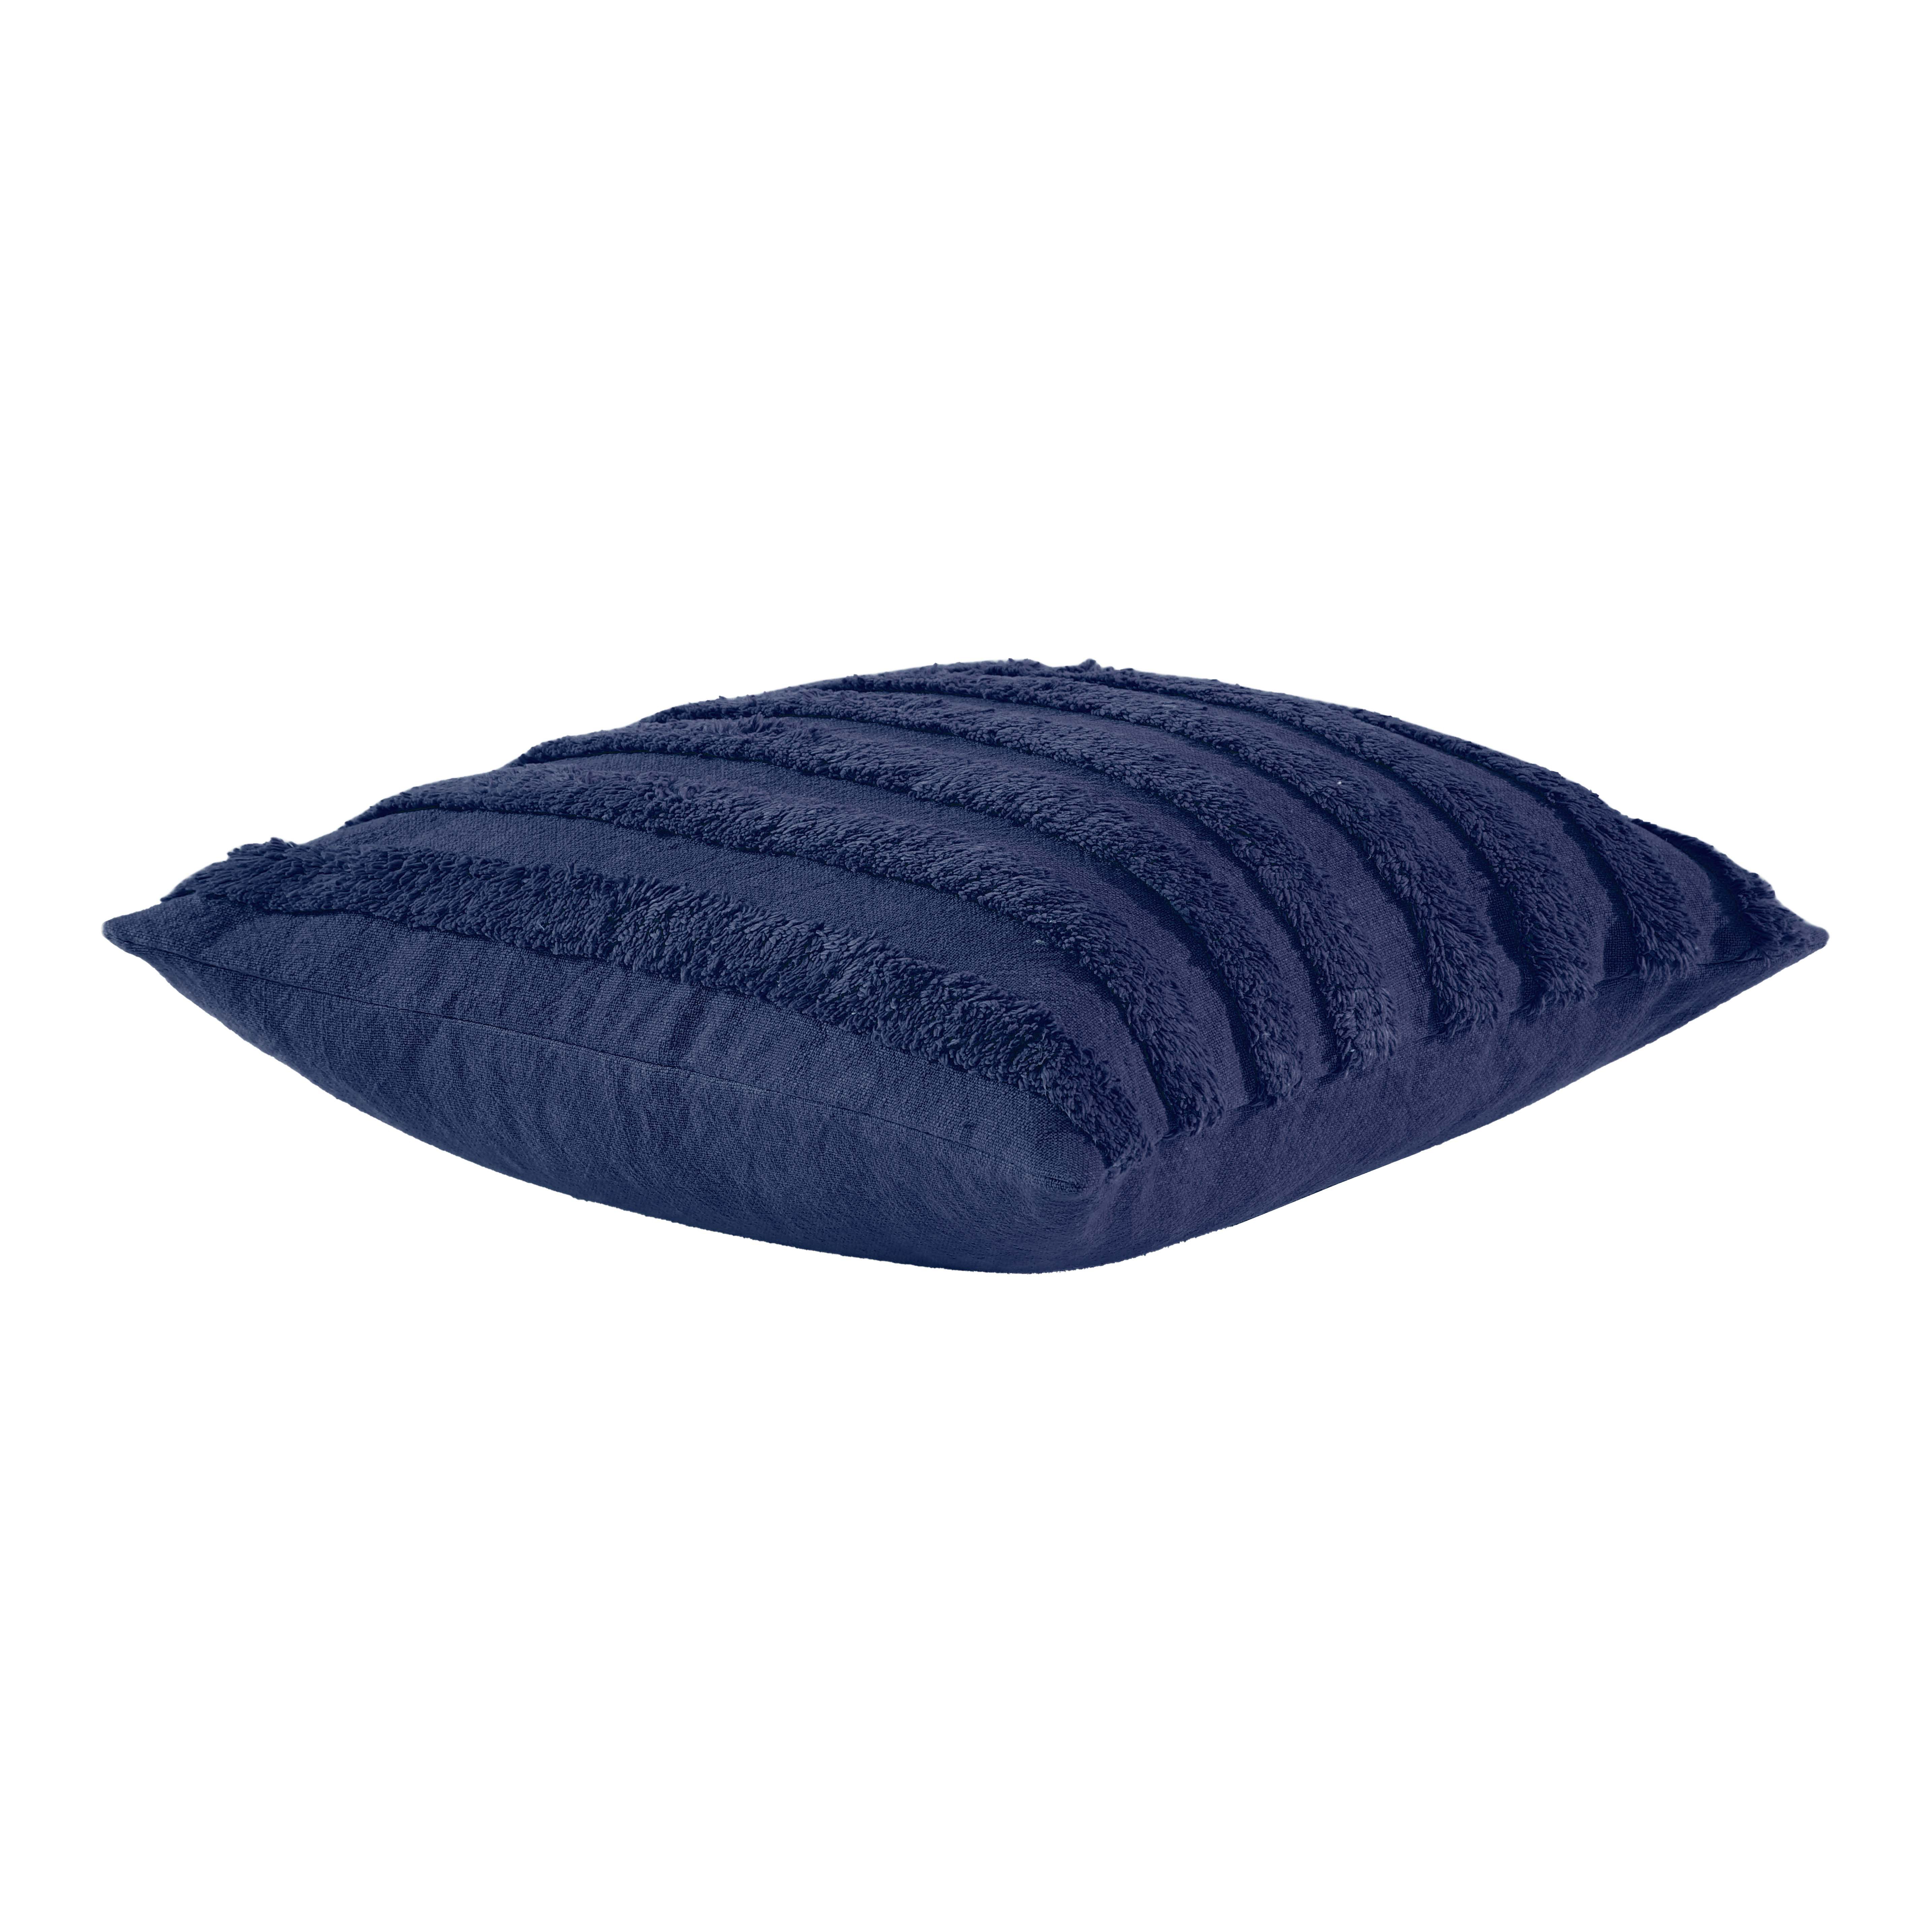 Mainstays Woven Stripe Decorative Pillow, 18x18, Navy 